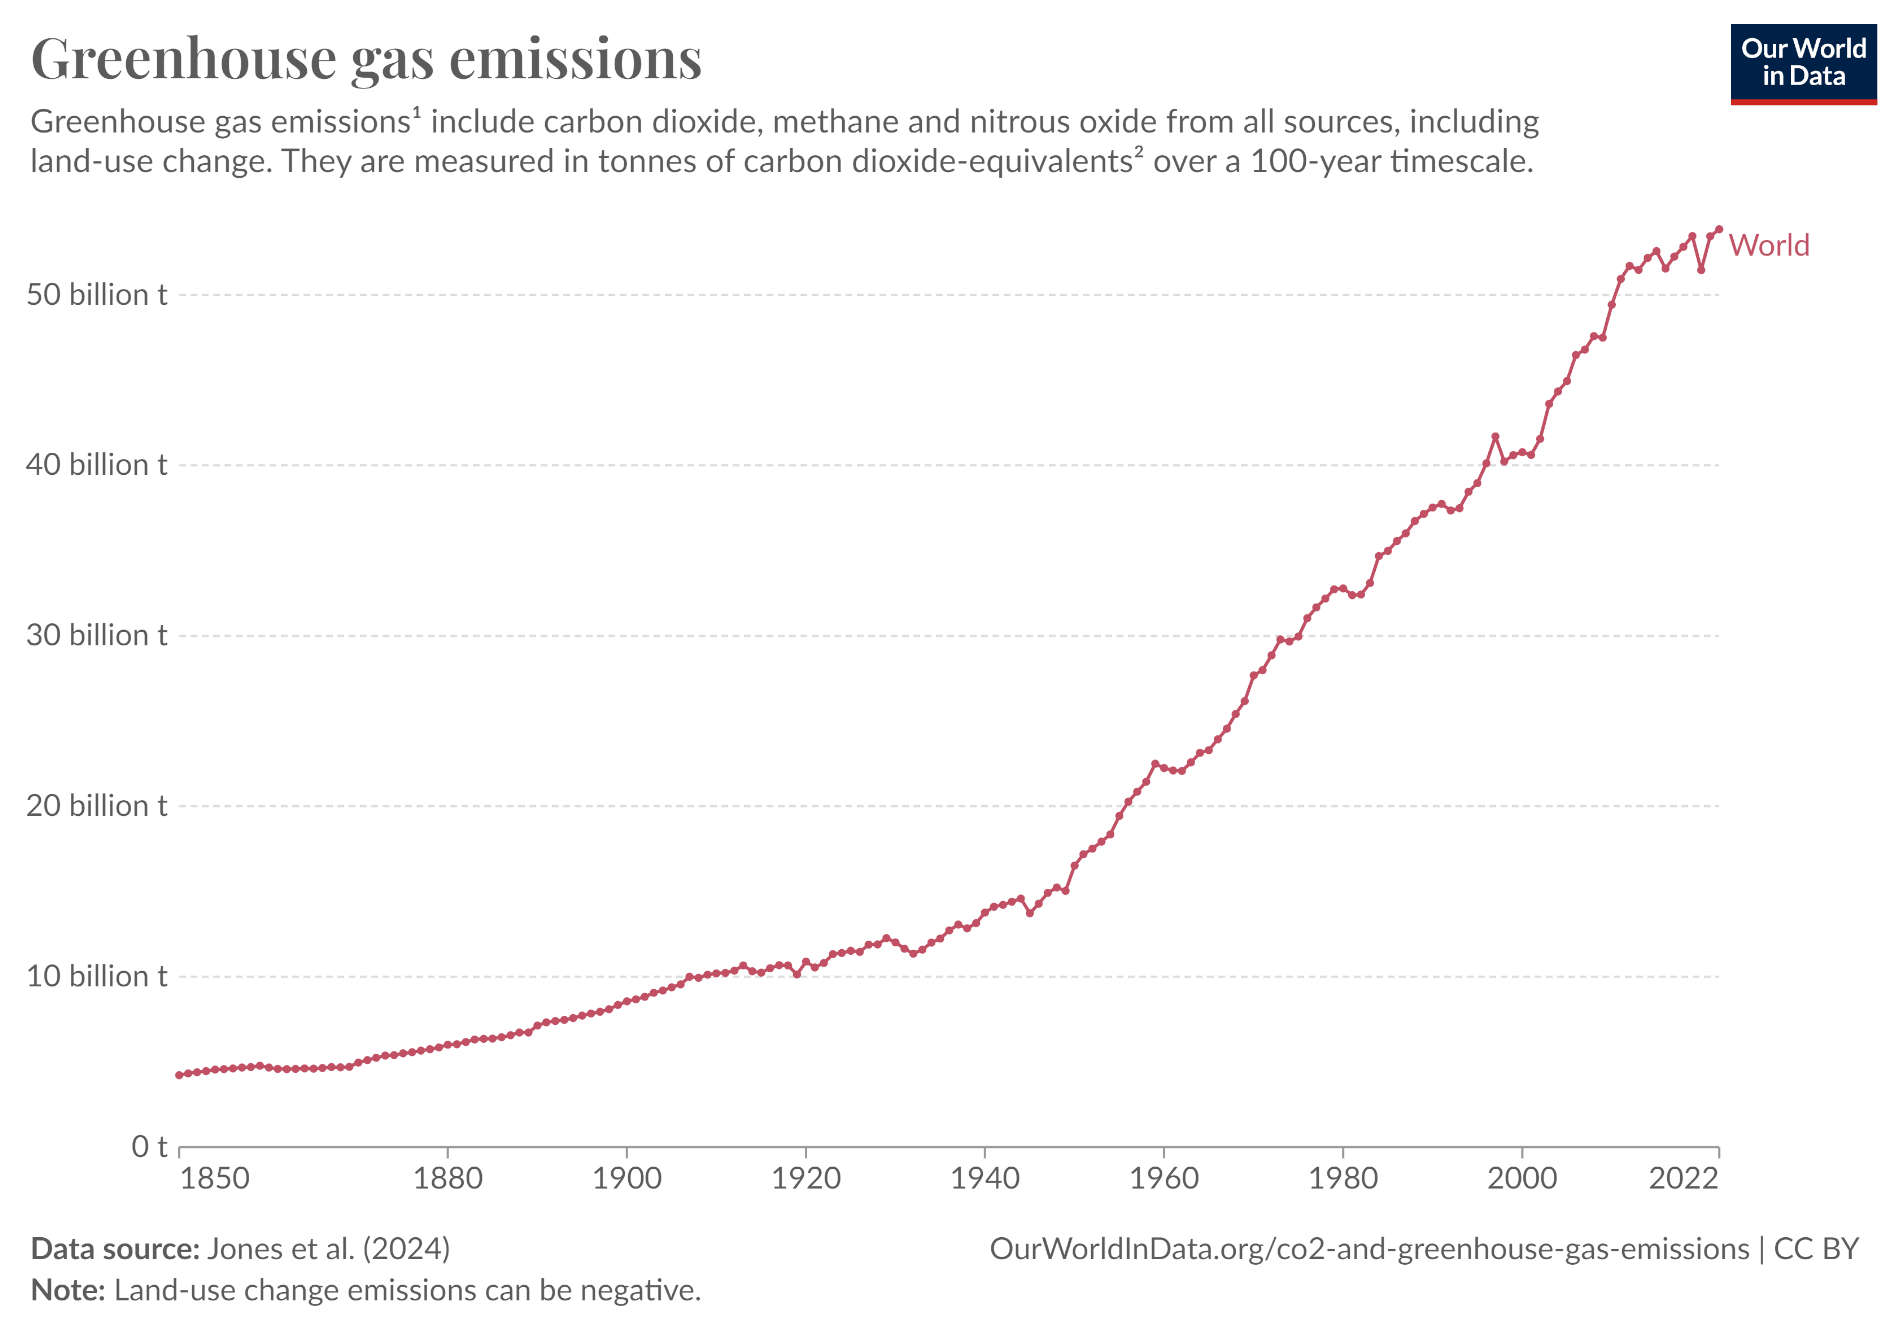 Global greenhouse gas emissions, 1850-2021 (source: ourworldindata.org)